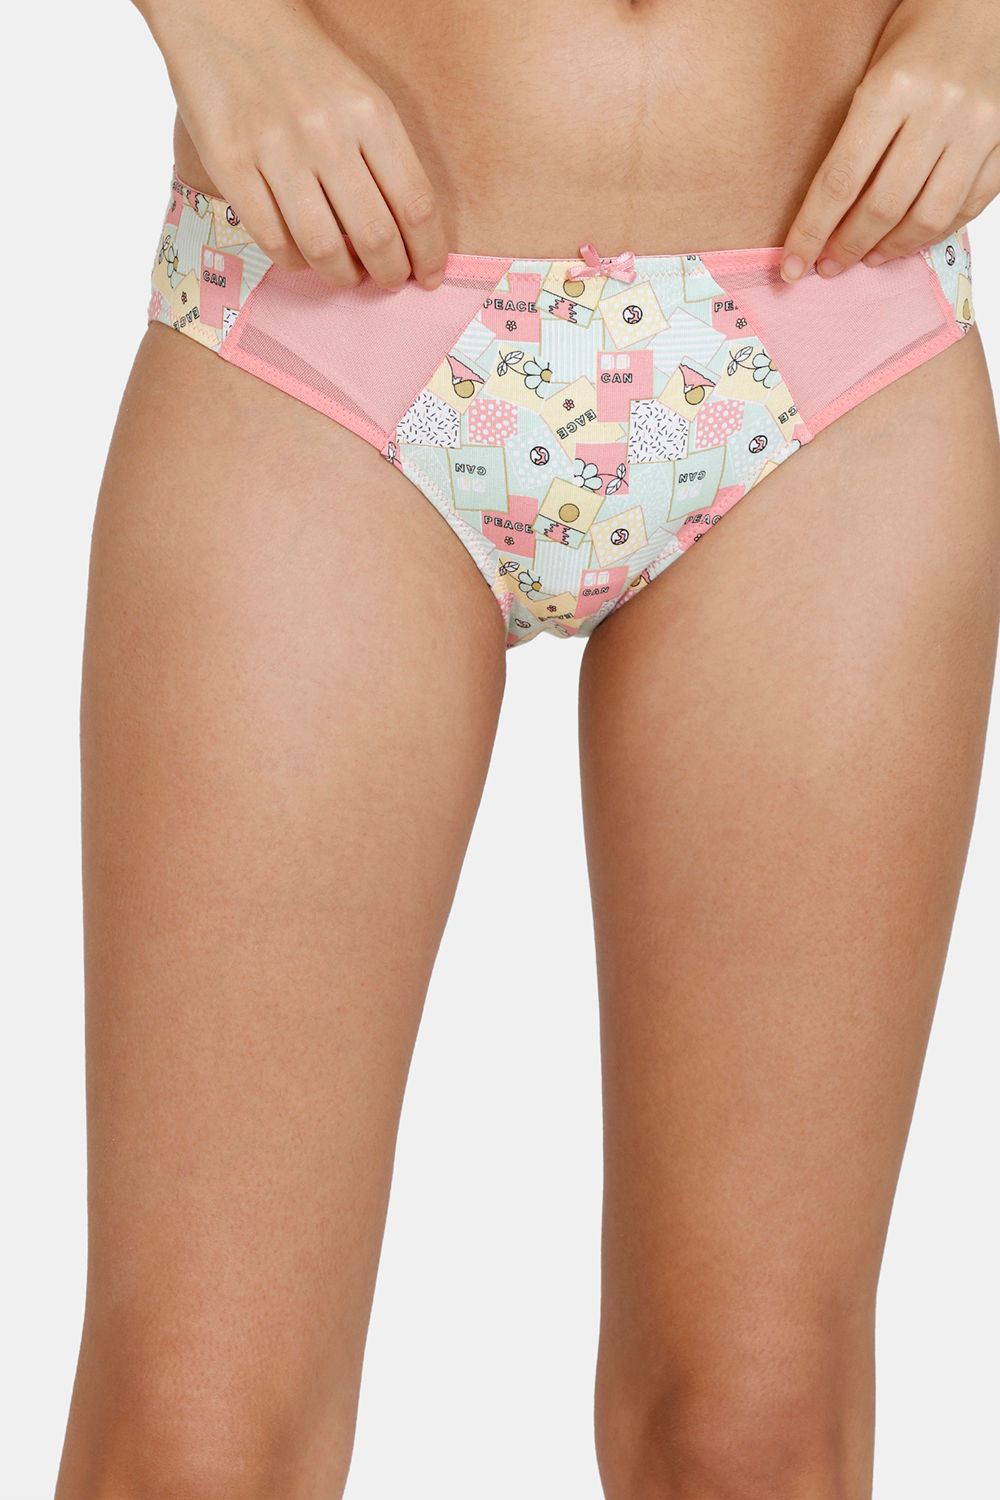 Buy VIKIMO Handmade Women's Non Padded Bra Panty Combo Pack of